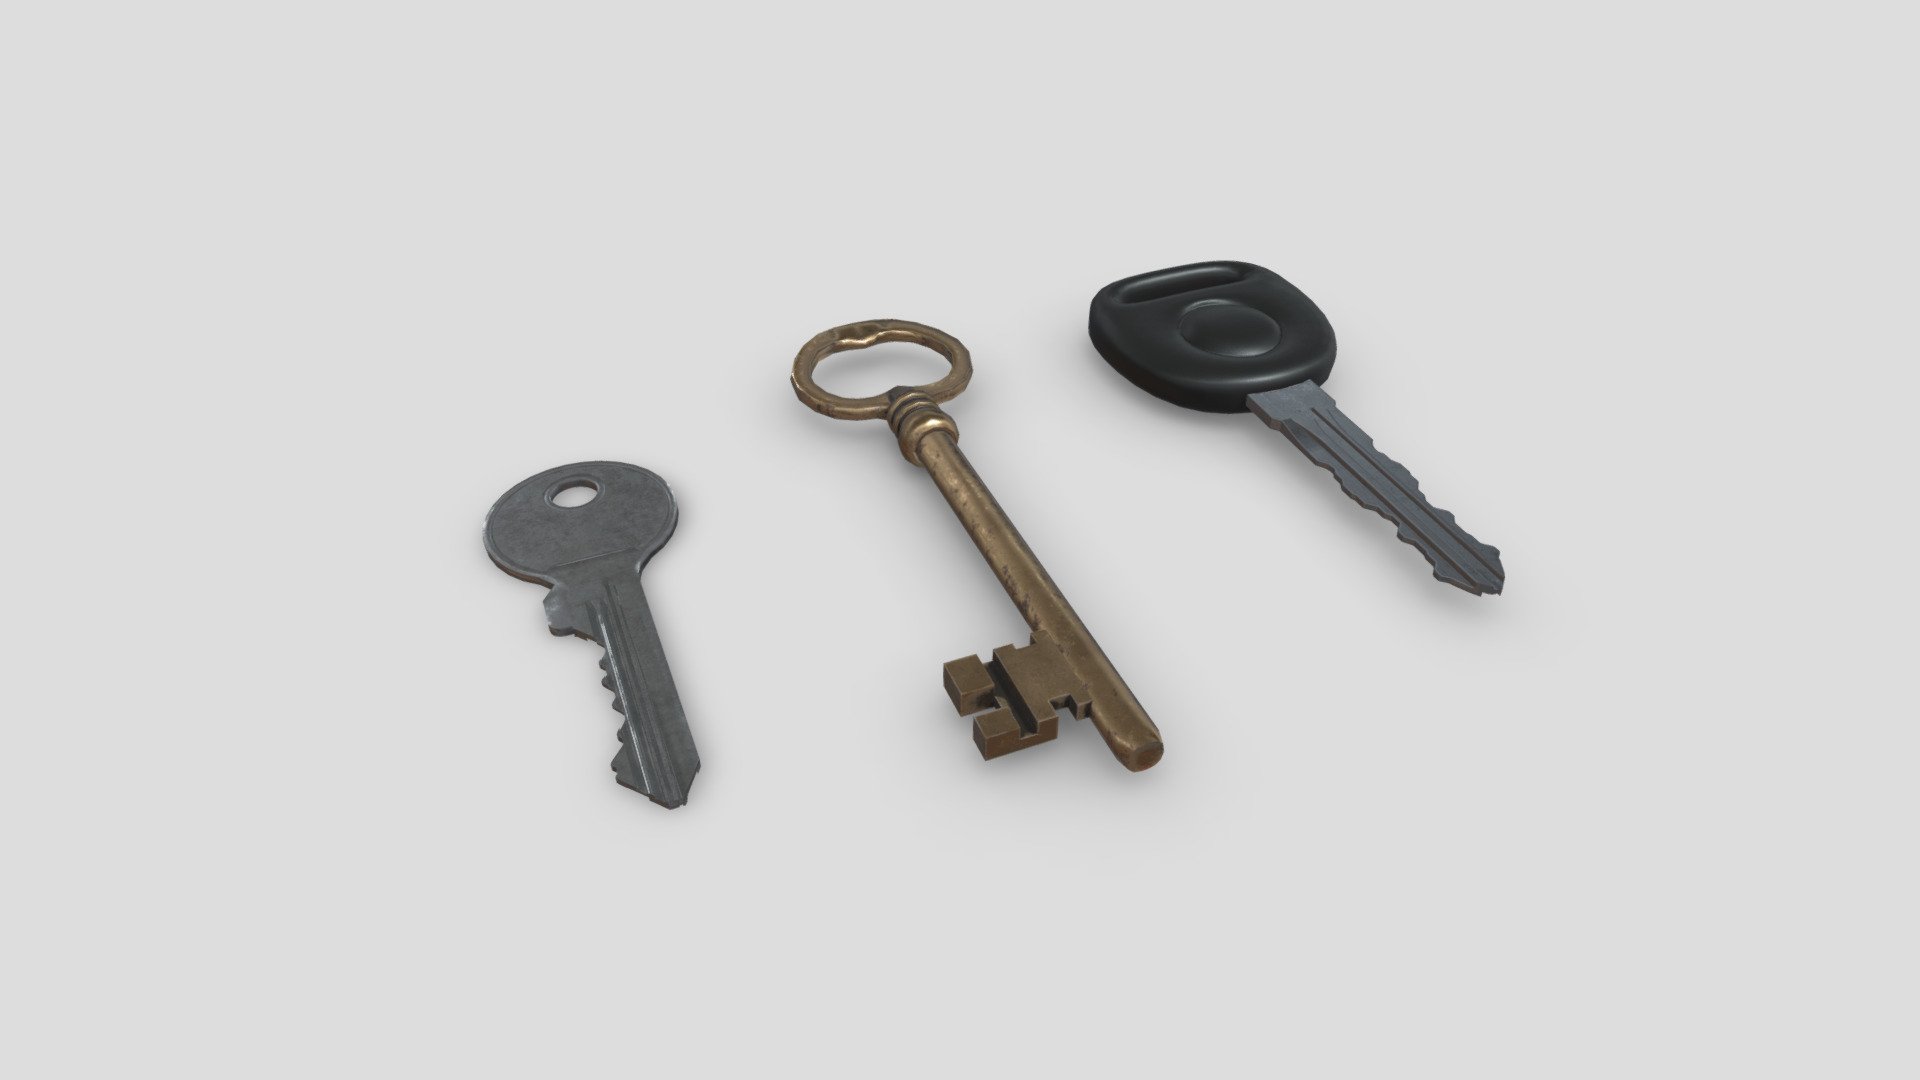 low poly 3d model of keys (Modern door key, vintage key , car key) - Keys Pack - Buy Royalty Free 3D model by assetfactory 3d model